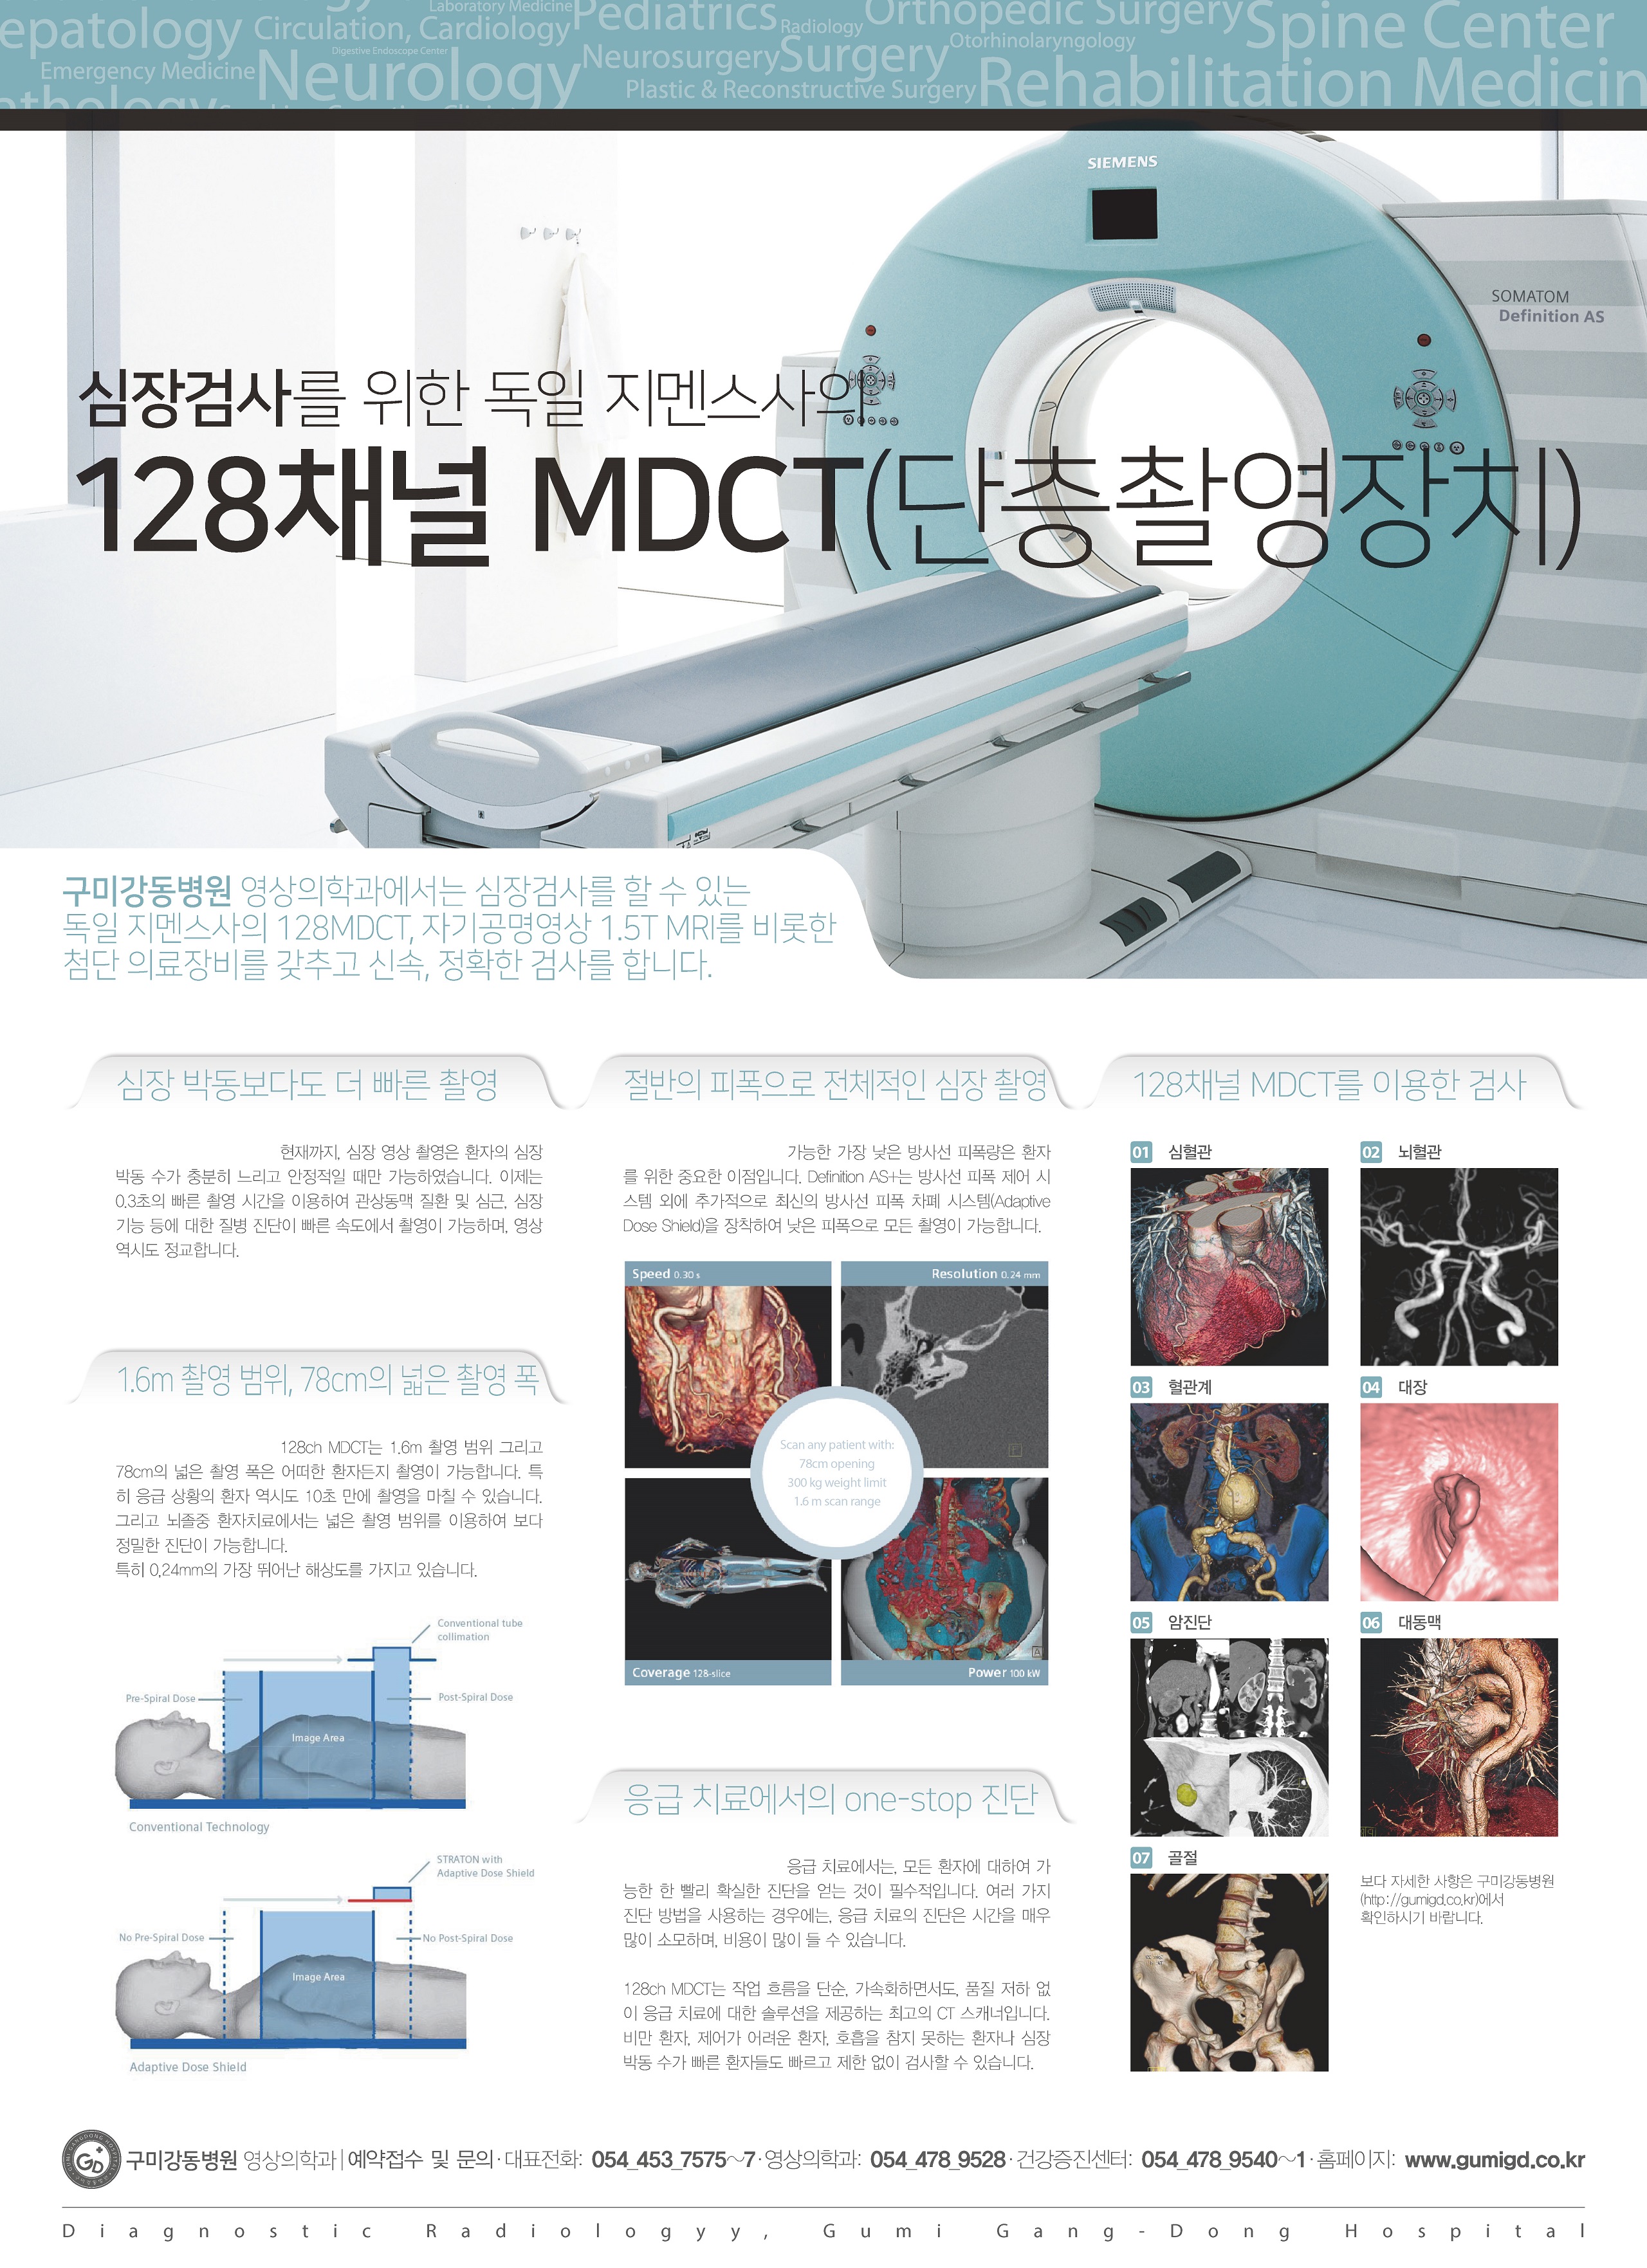 MDCT (Multi Detector CT) 128ch 첨부 이미지